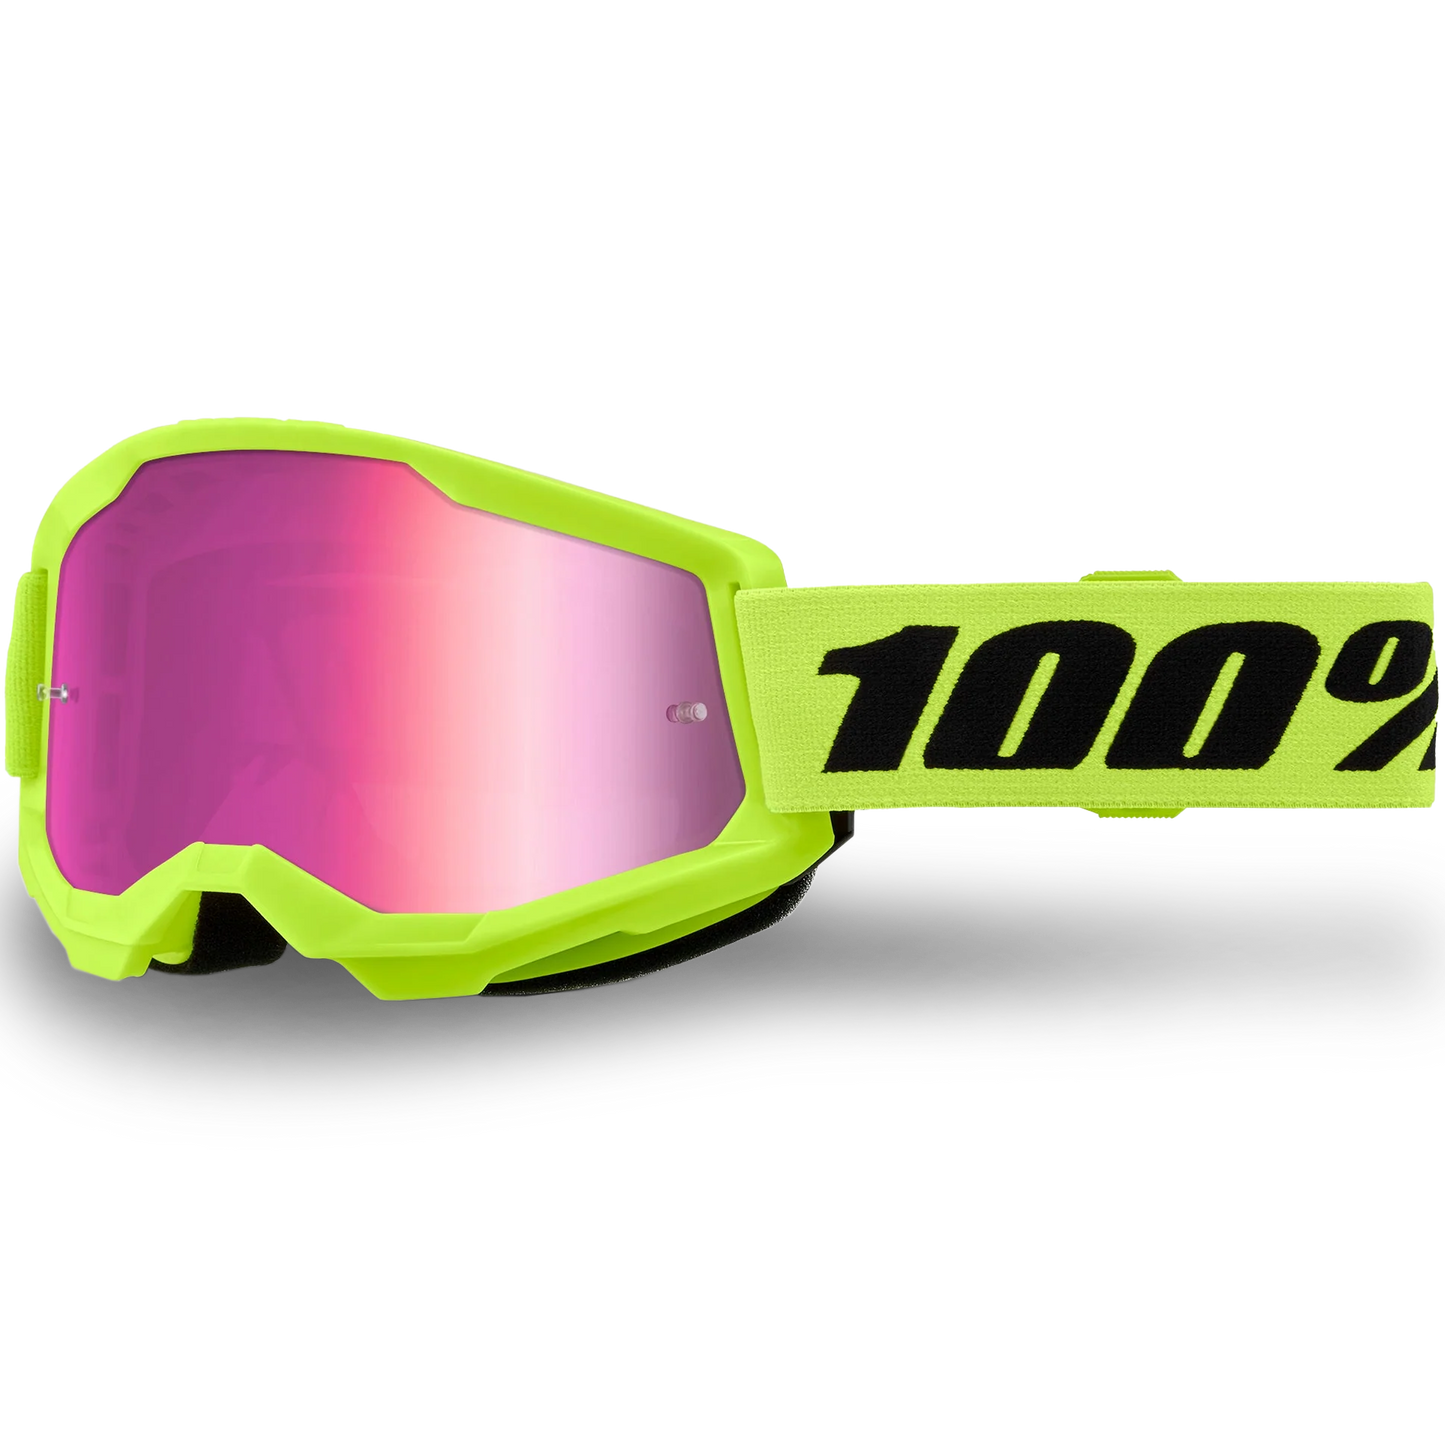 100% Strata 2 Goggles - Neon Yellow (Mirror Pink Lens)